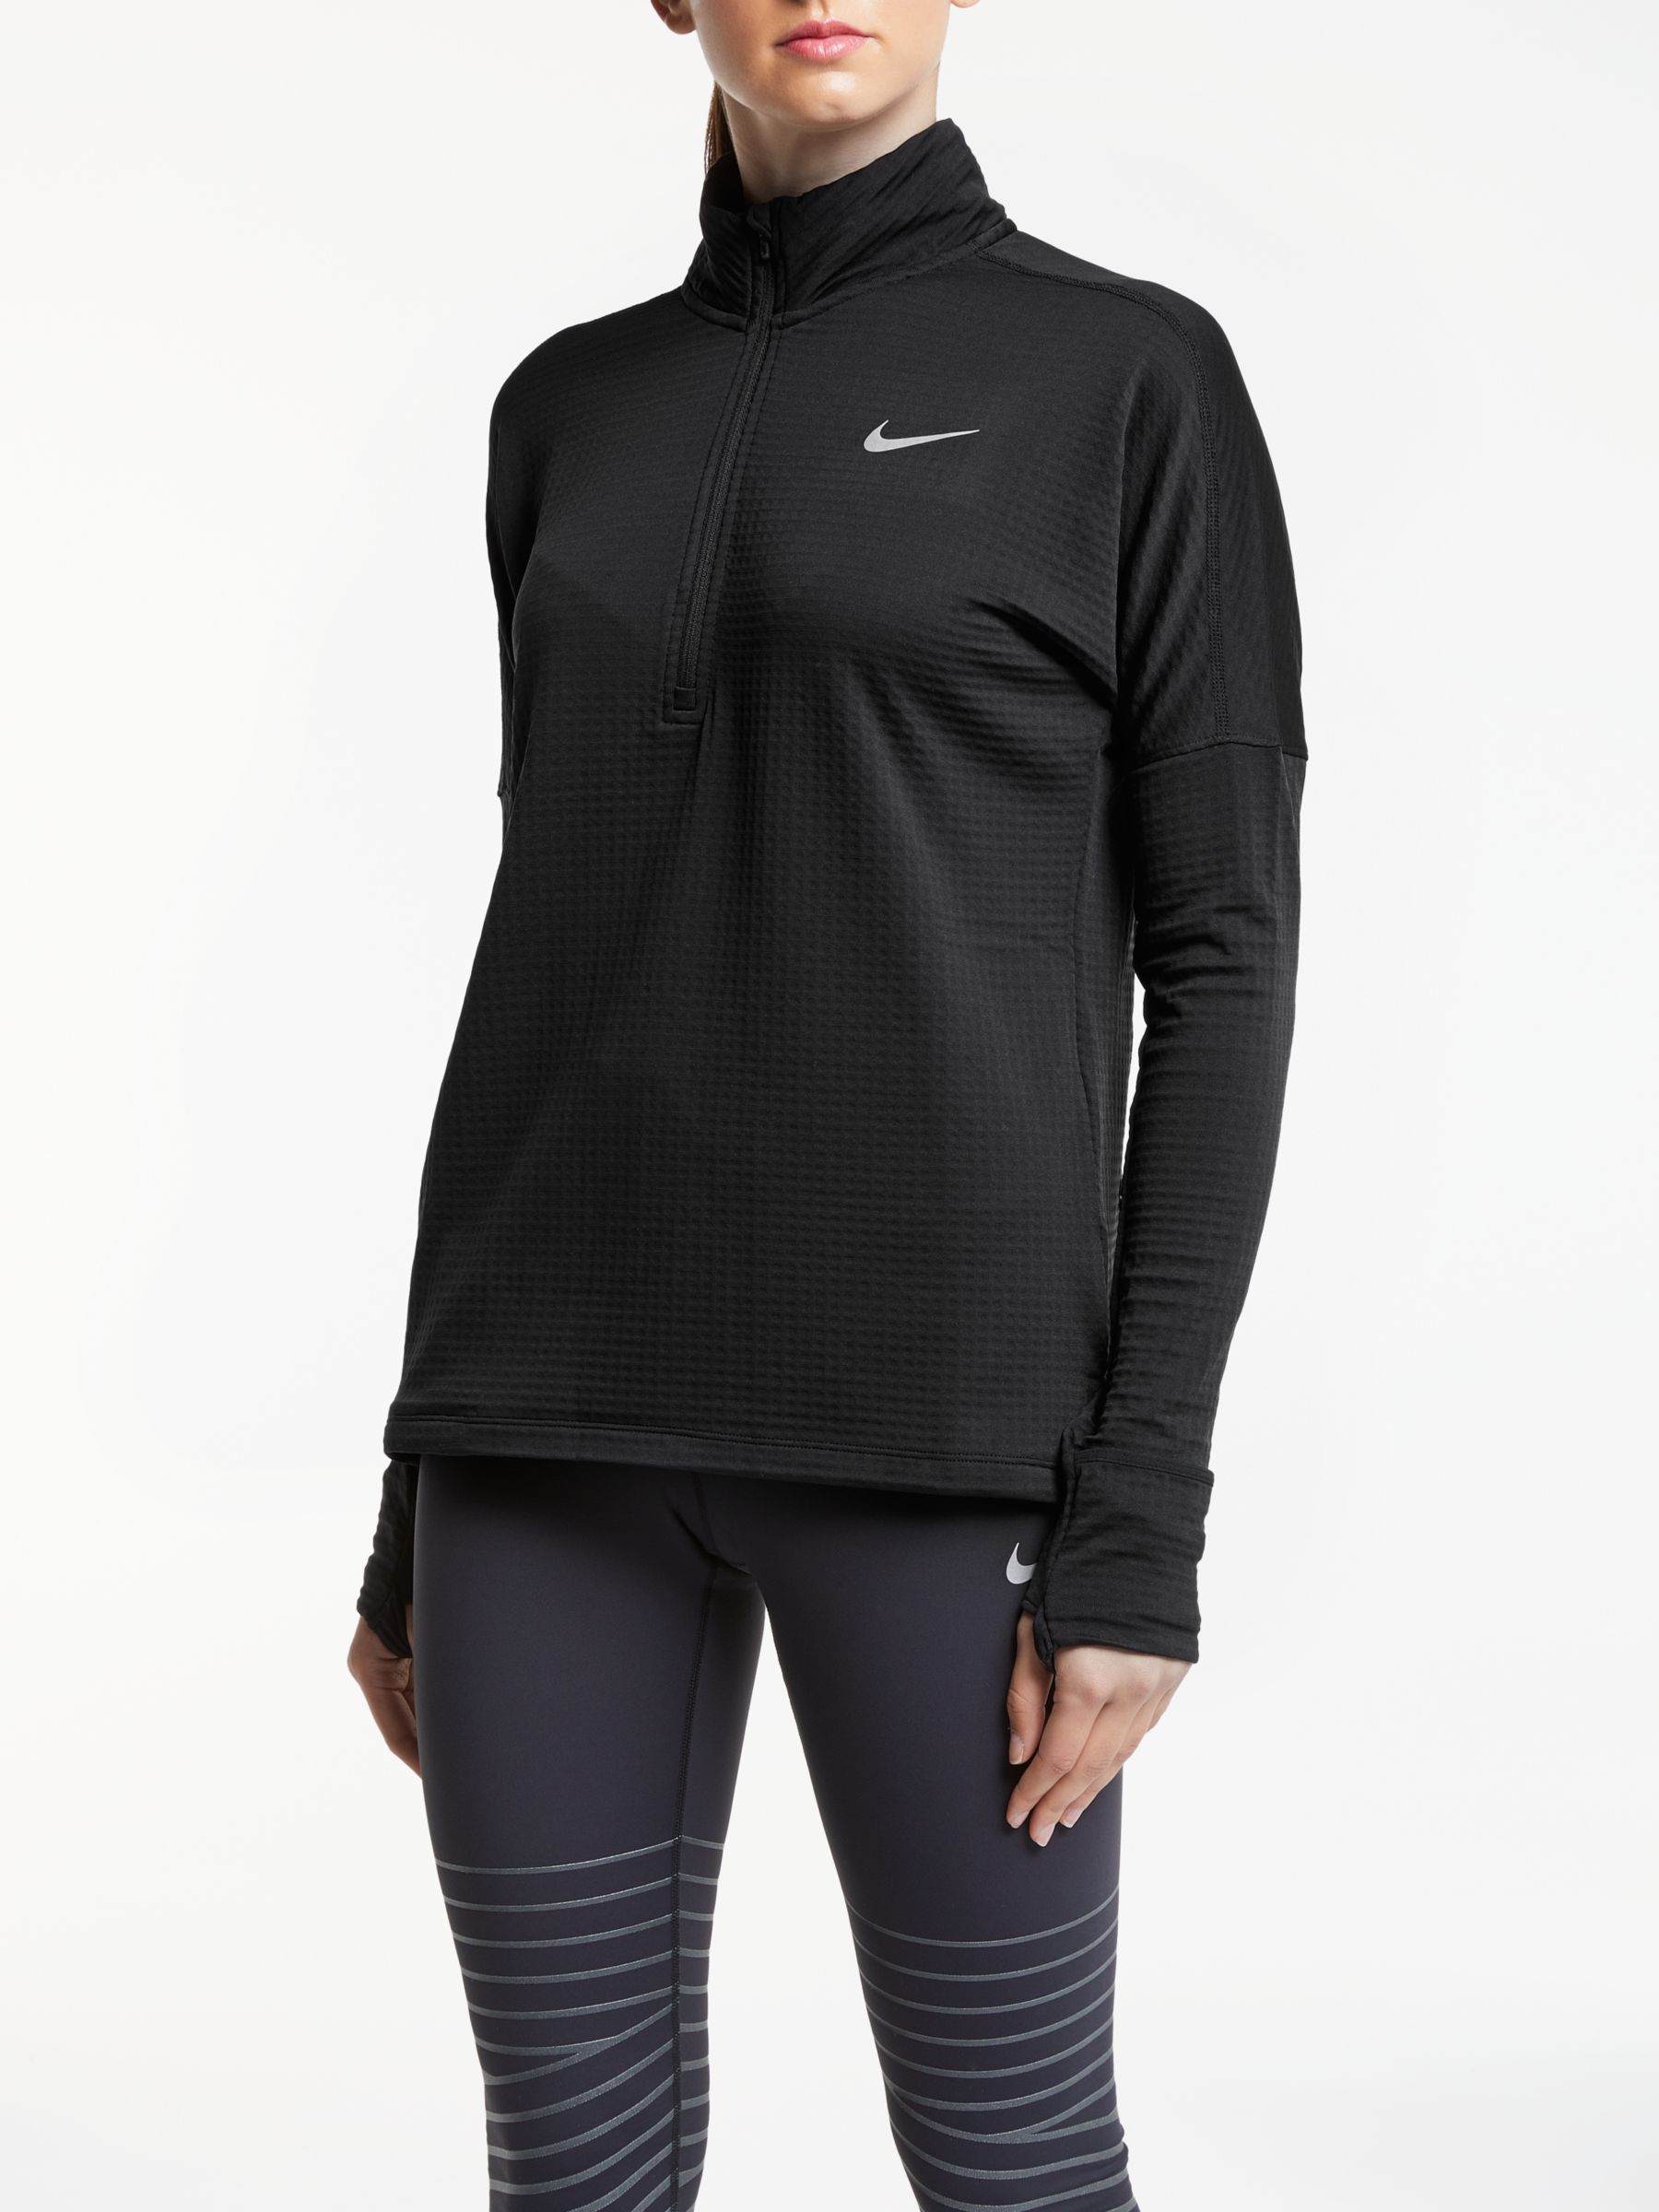 Nike Therma Sphere Element Long Sleeve Running Top, Black, XS